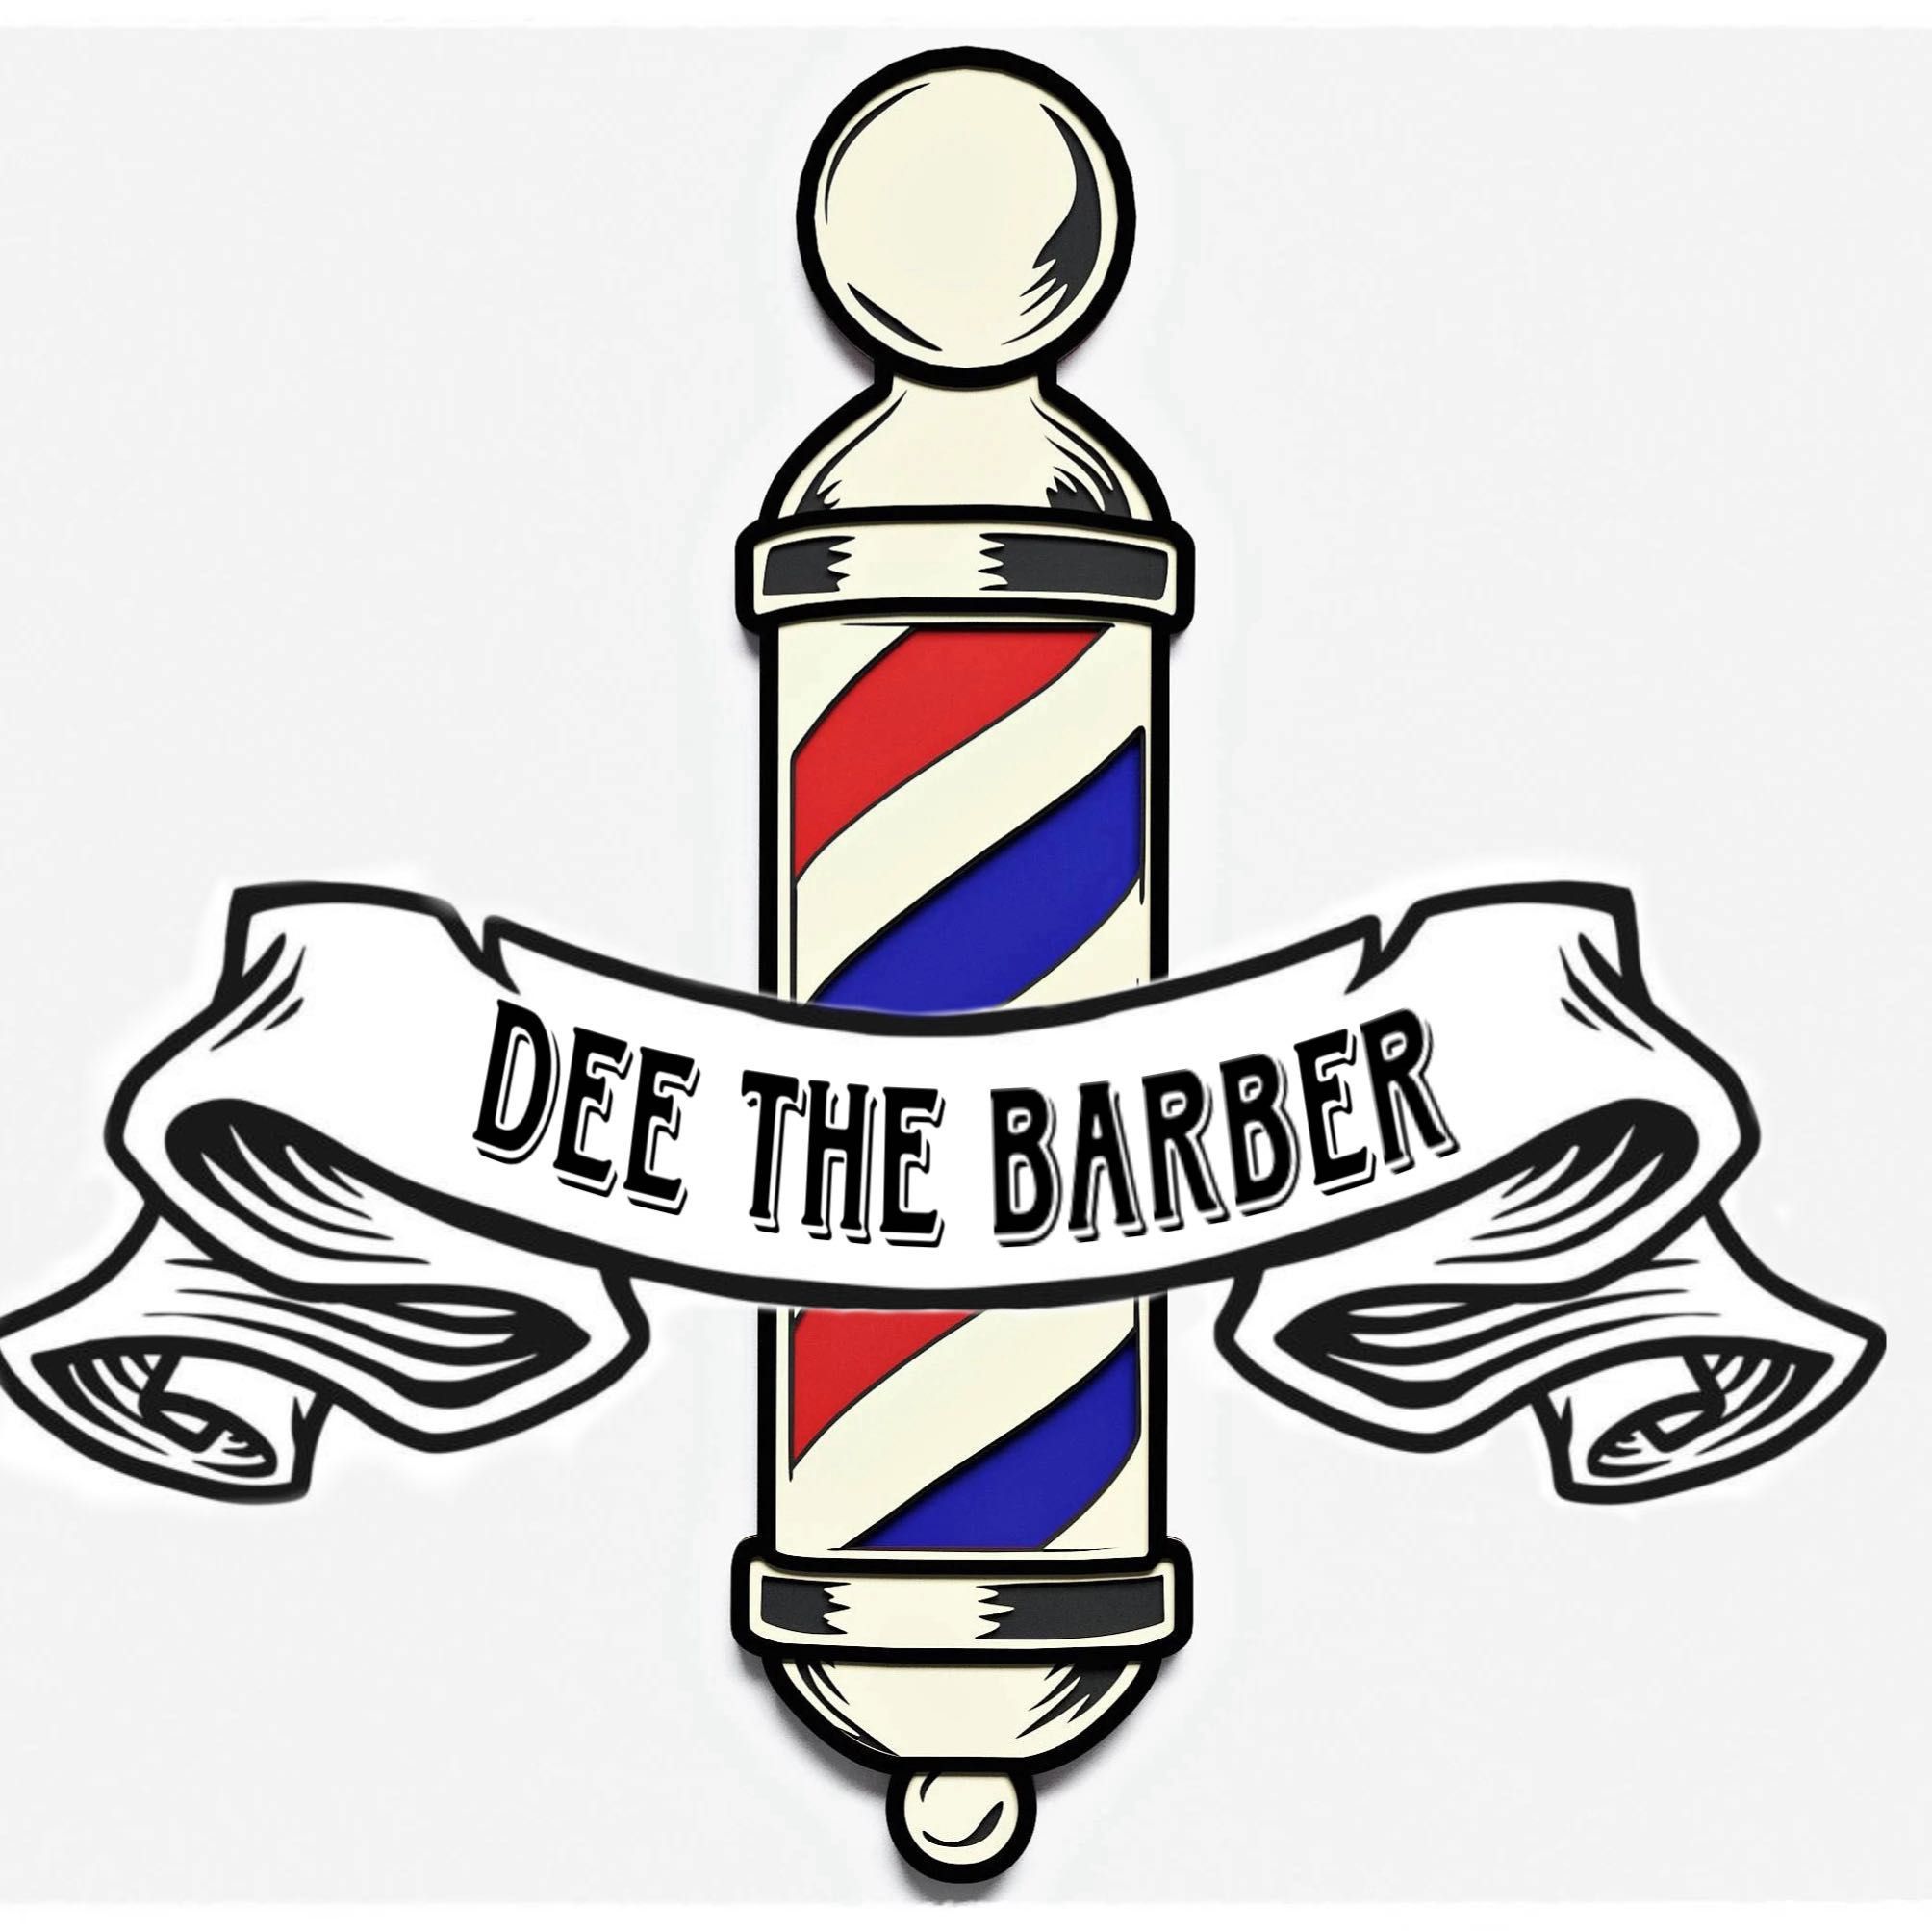 Dee the barber, 1826 E Platte Ave, Colorado Springs, 80909